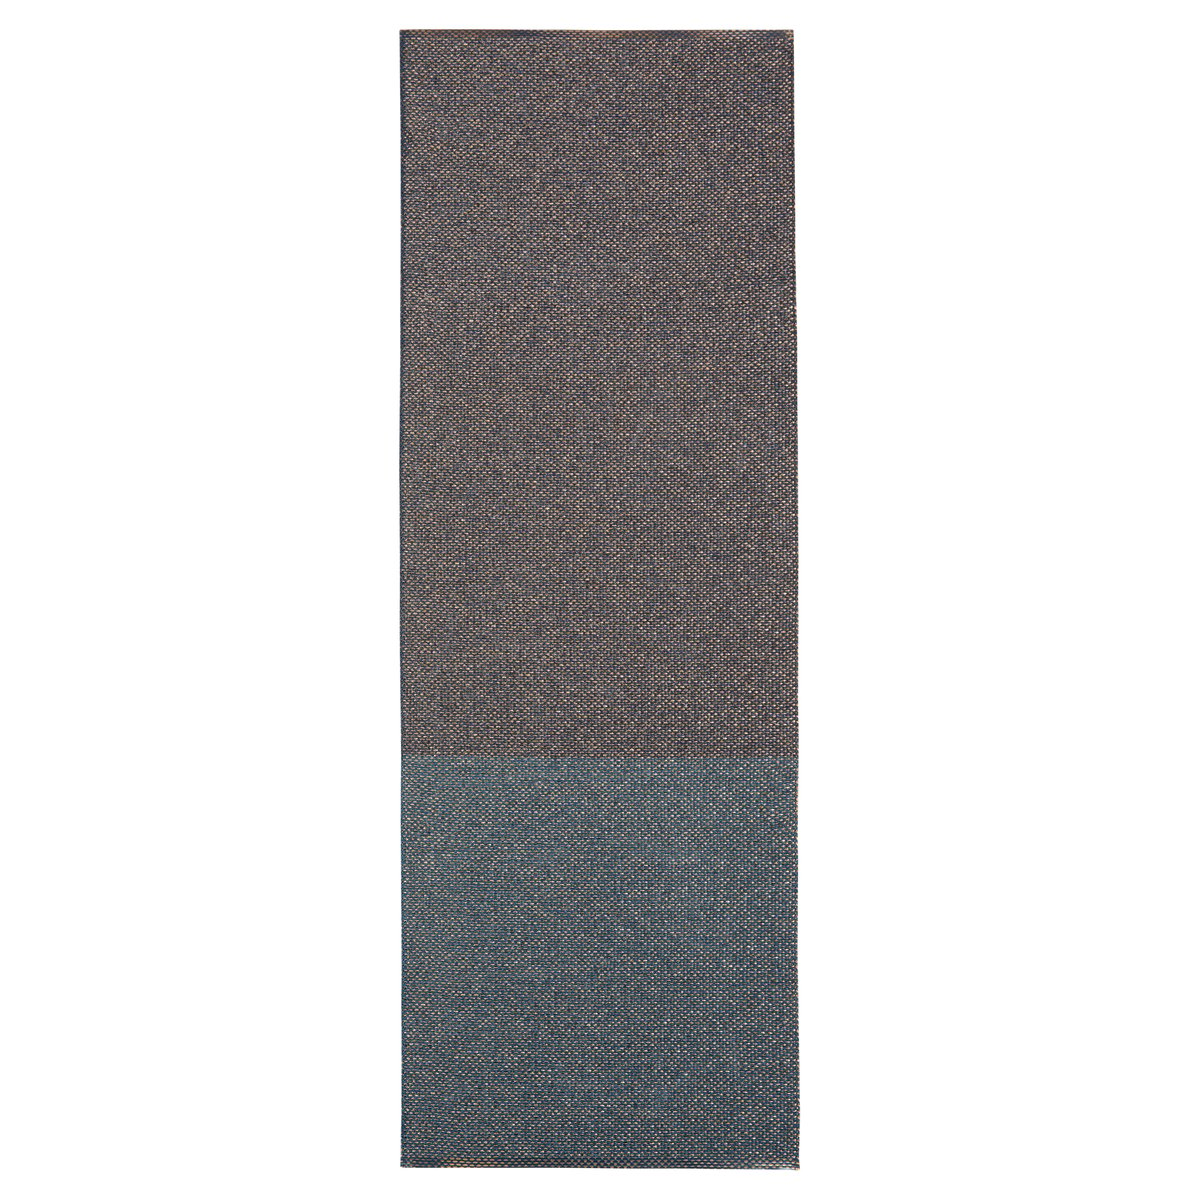 Brita Sweden Moor matto midnight metalliic (sininen-pronssi) 70×200 cm